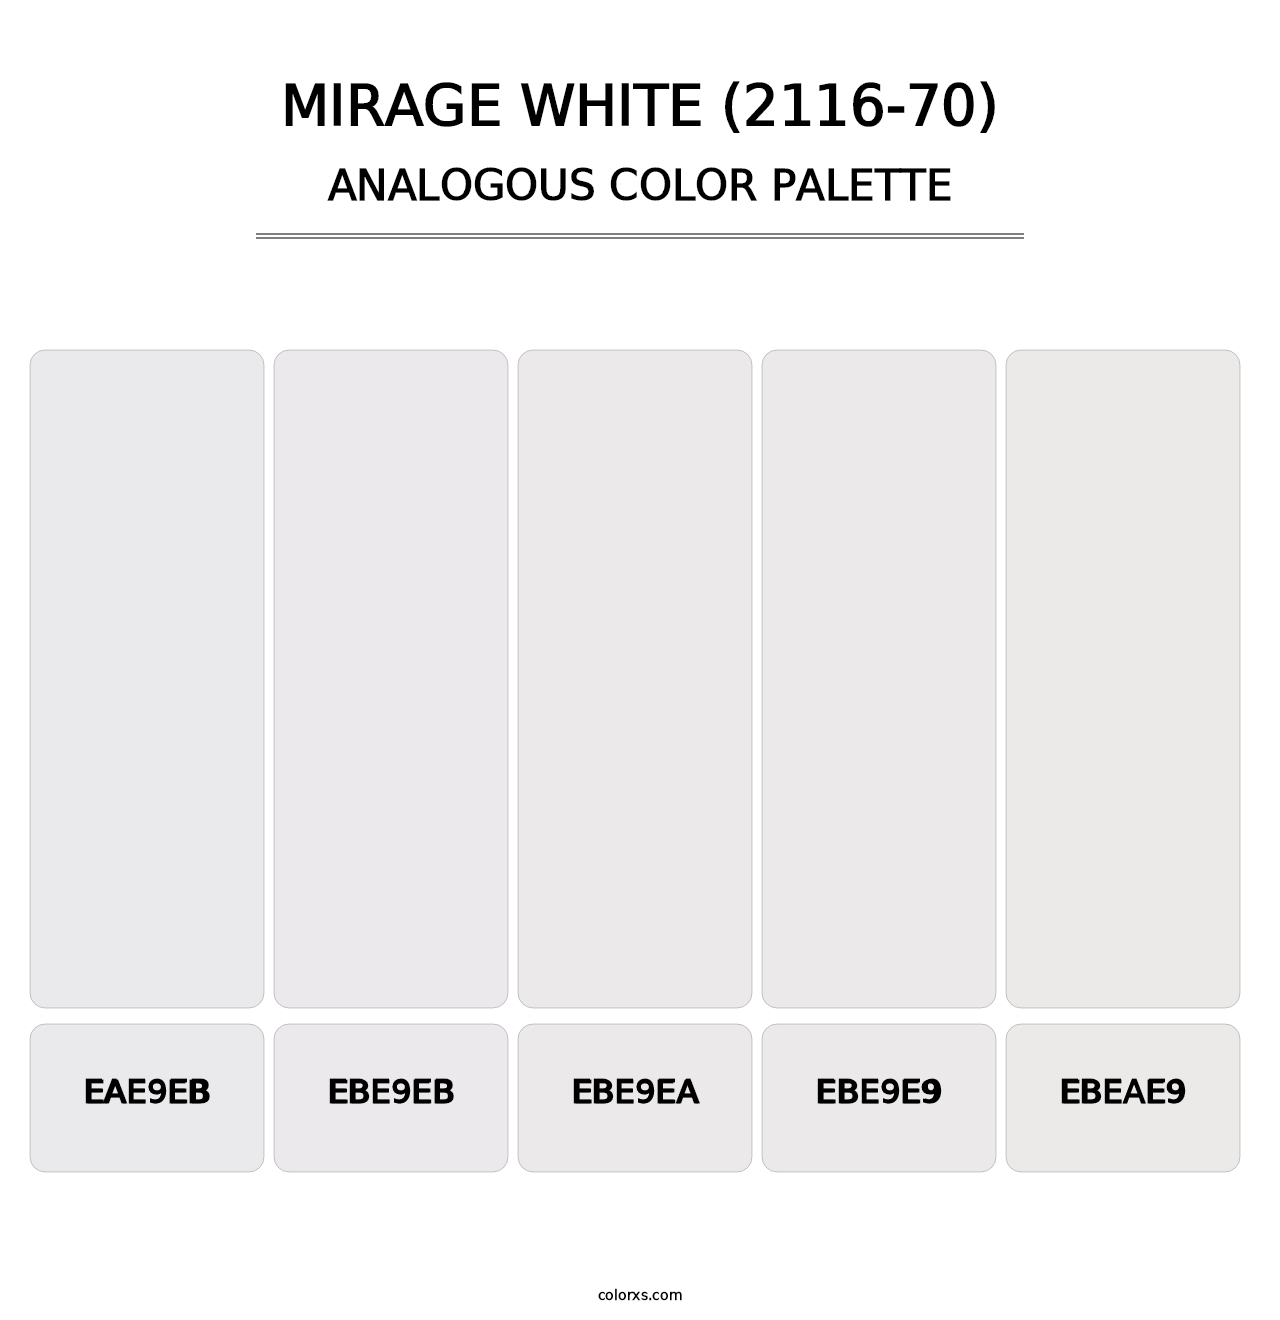 Mirage White (2116-70) - Analogous Color Palette